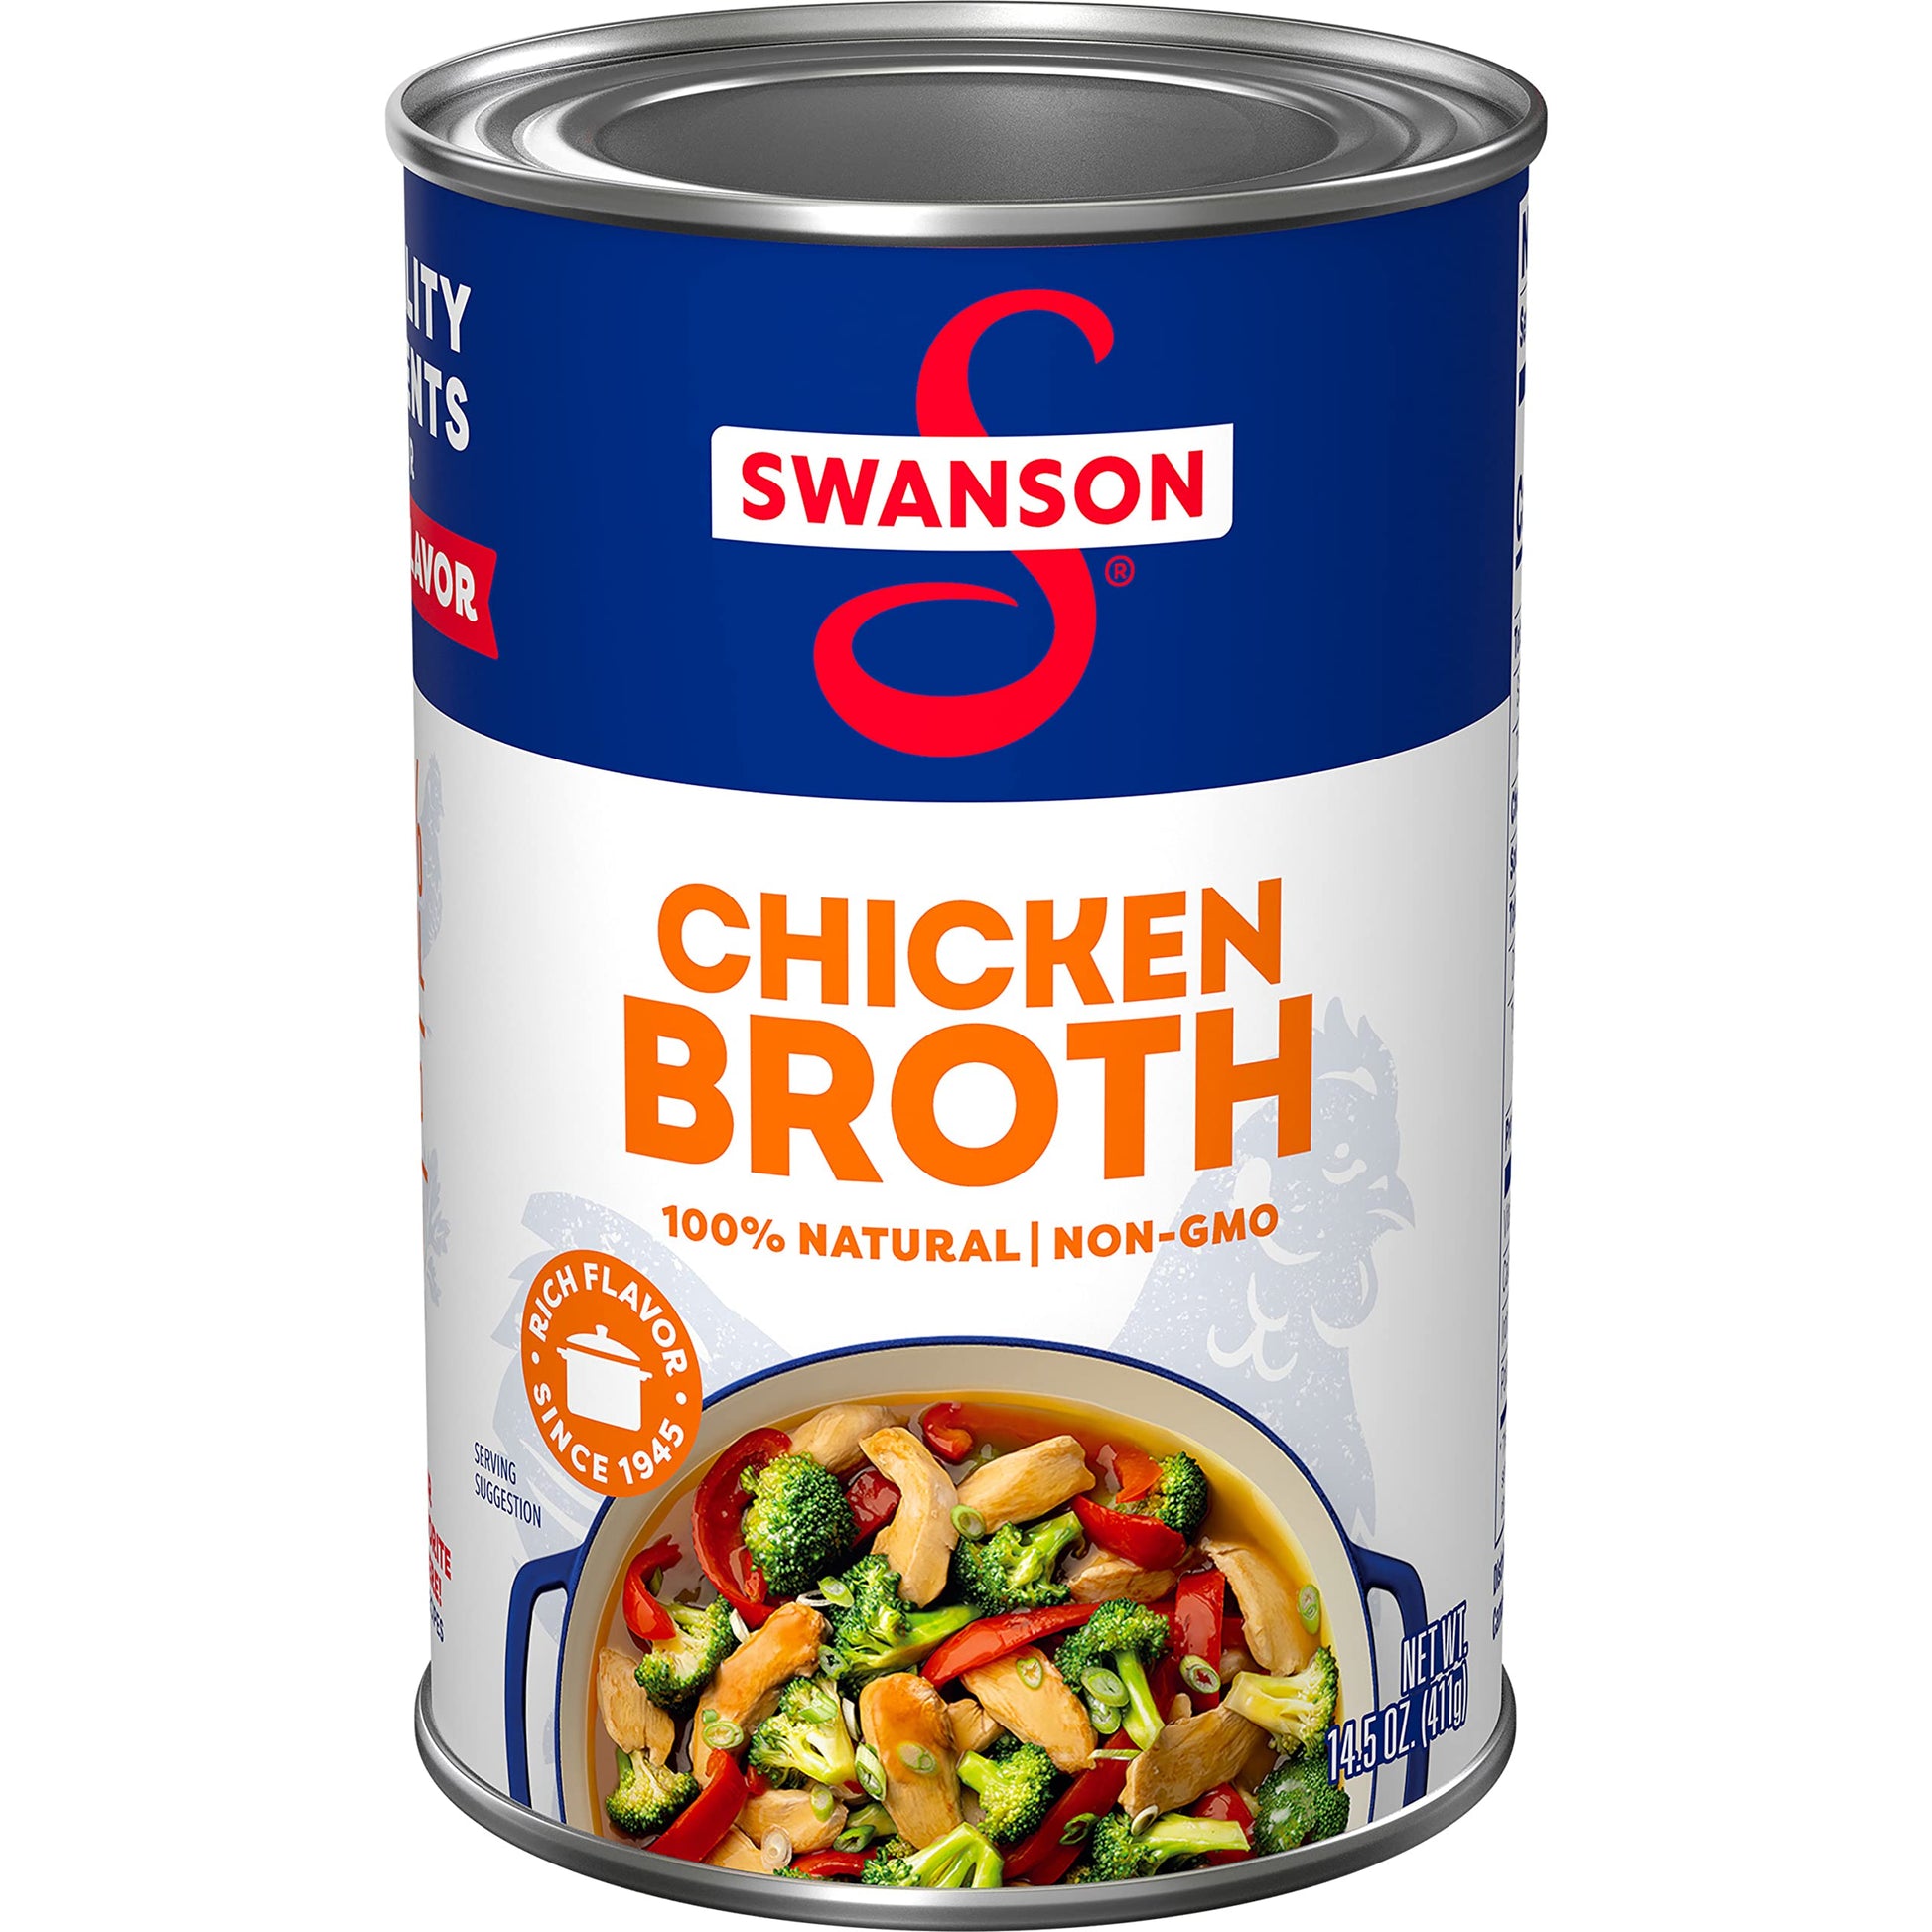 Swanson Chicken Broth 14.5oz 24 Count